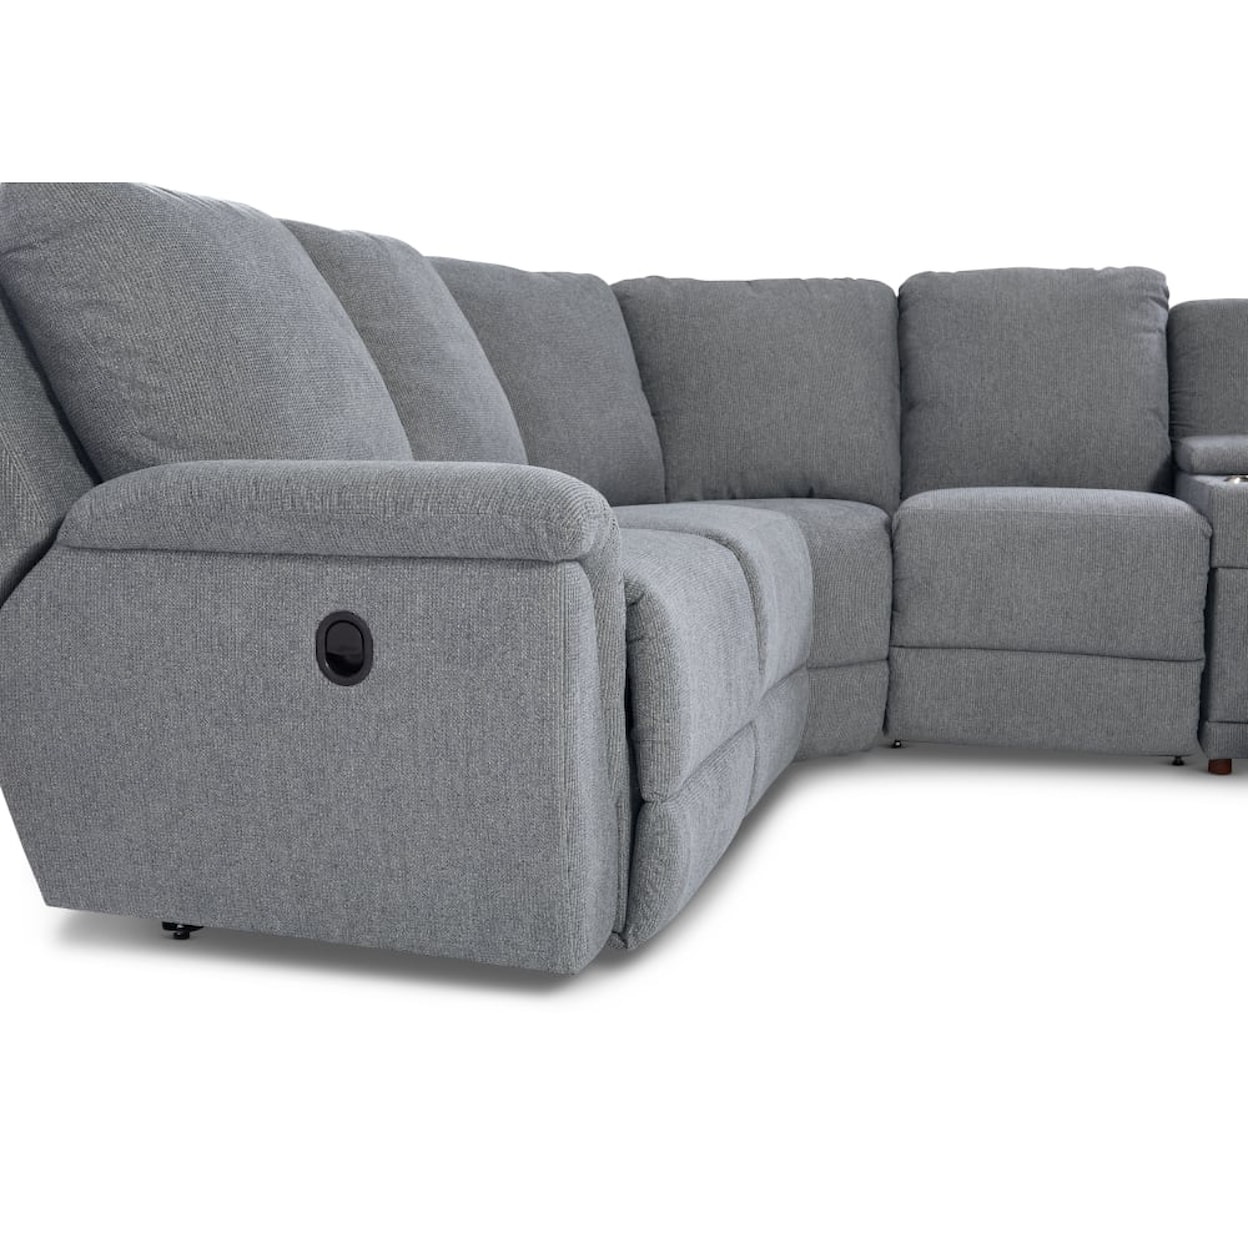 La-Z-Boy Rigby Reclining Sectional Sofa